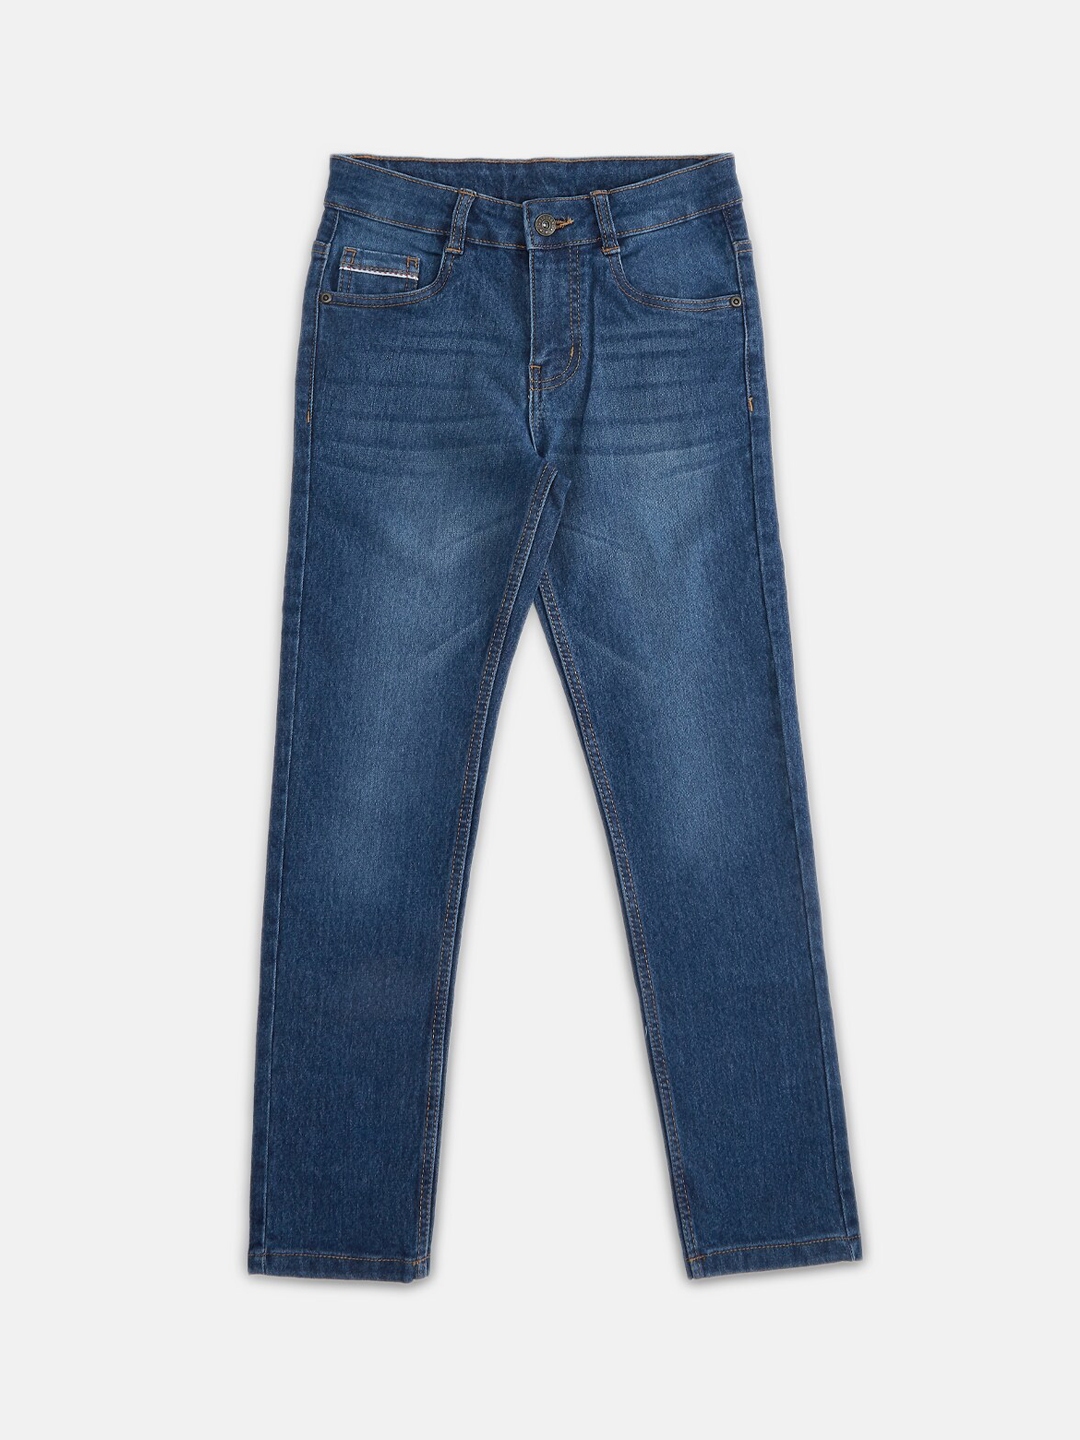 Buy Pantaloons Junior Boys Navy Blue Tapered Fit Light Fade Jeans ...